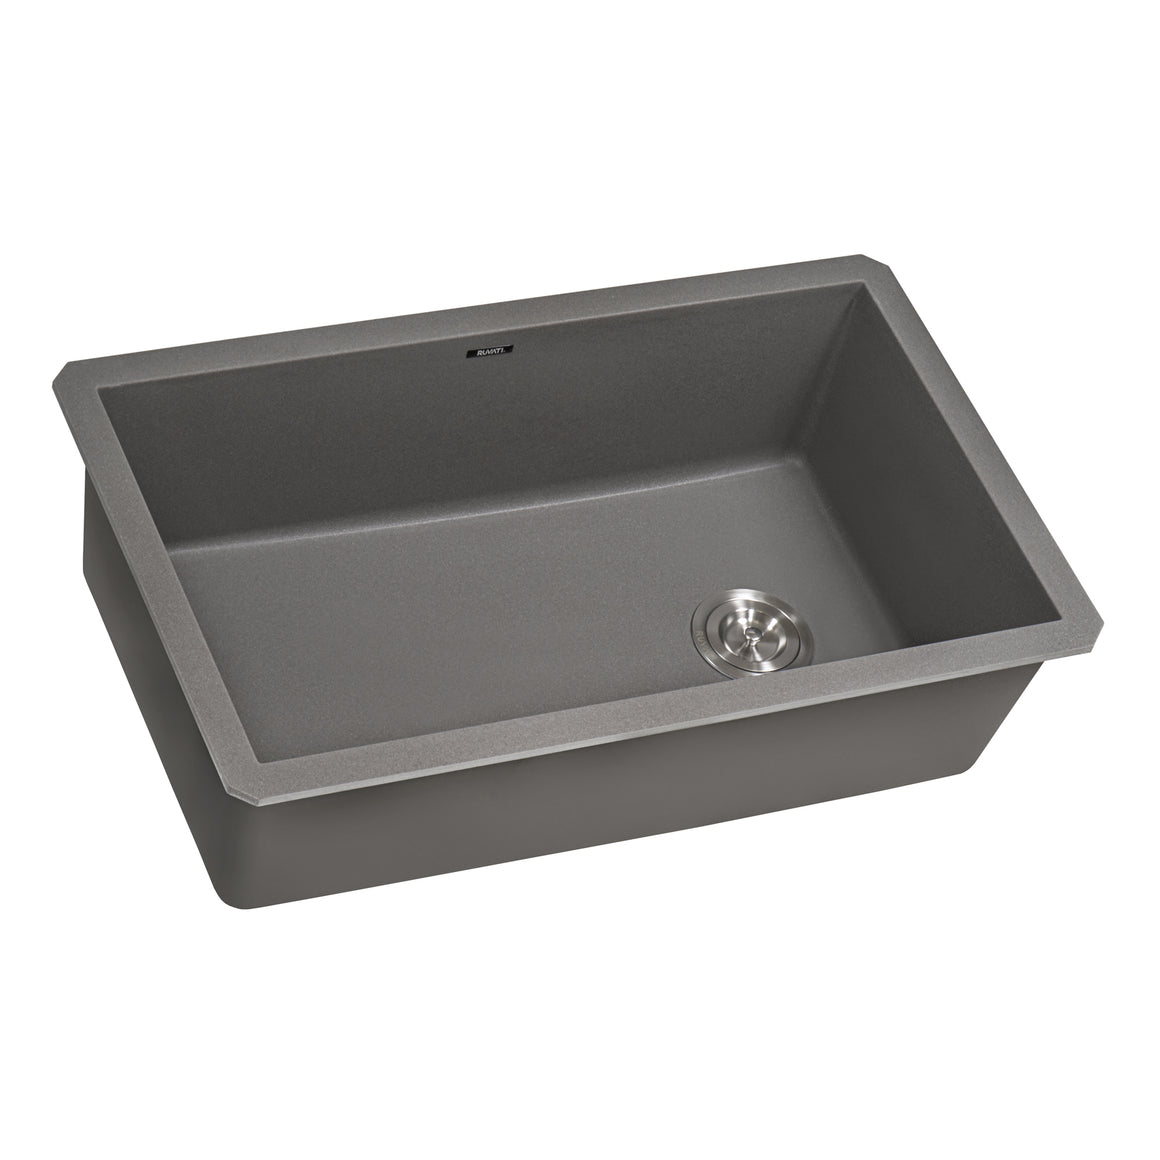 Ruvati 31 x 19 inch epiGranite Undermount Granite Composite Single Bowl Kitchen Sink - Urban Gray - RVG2033GR